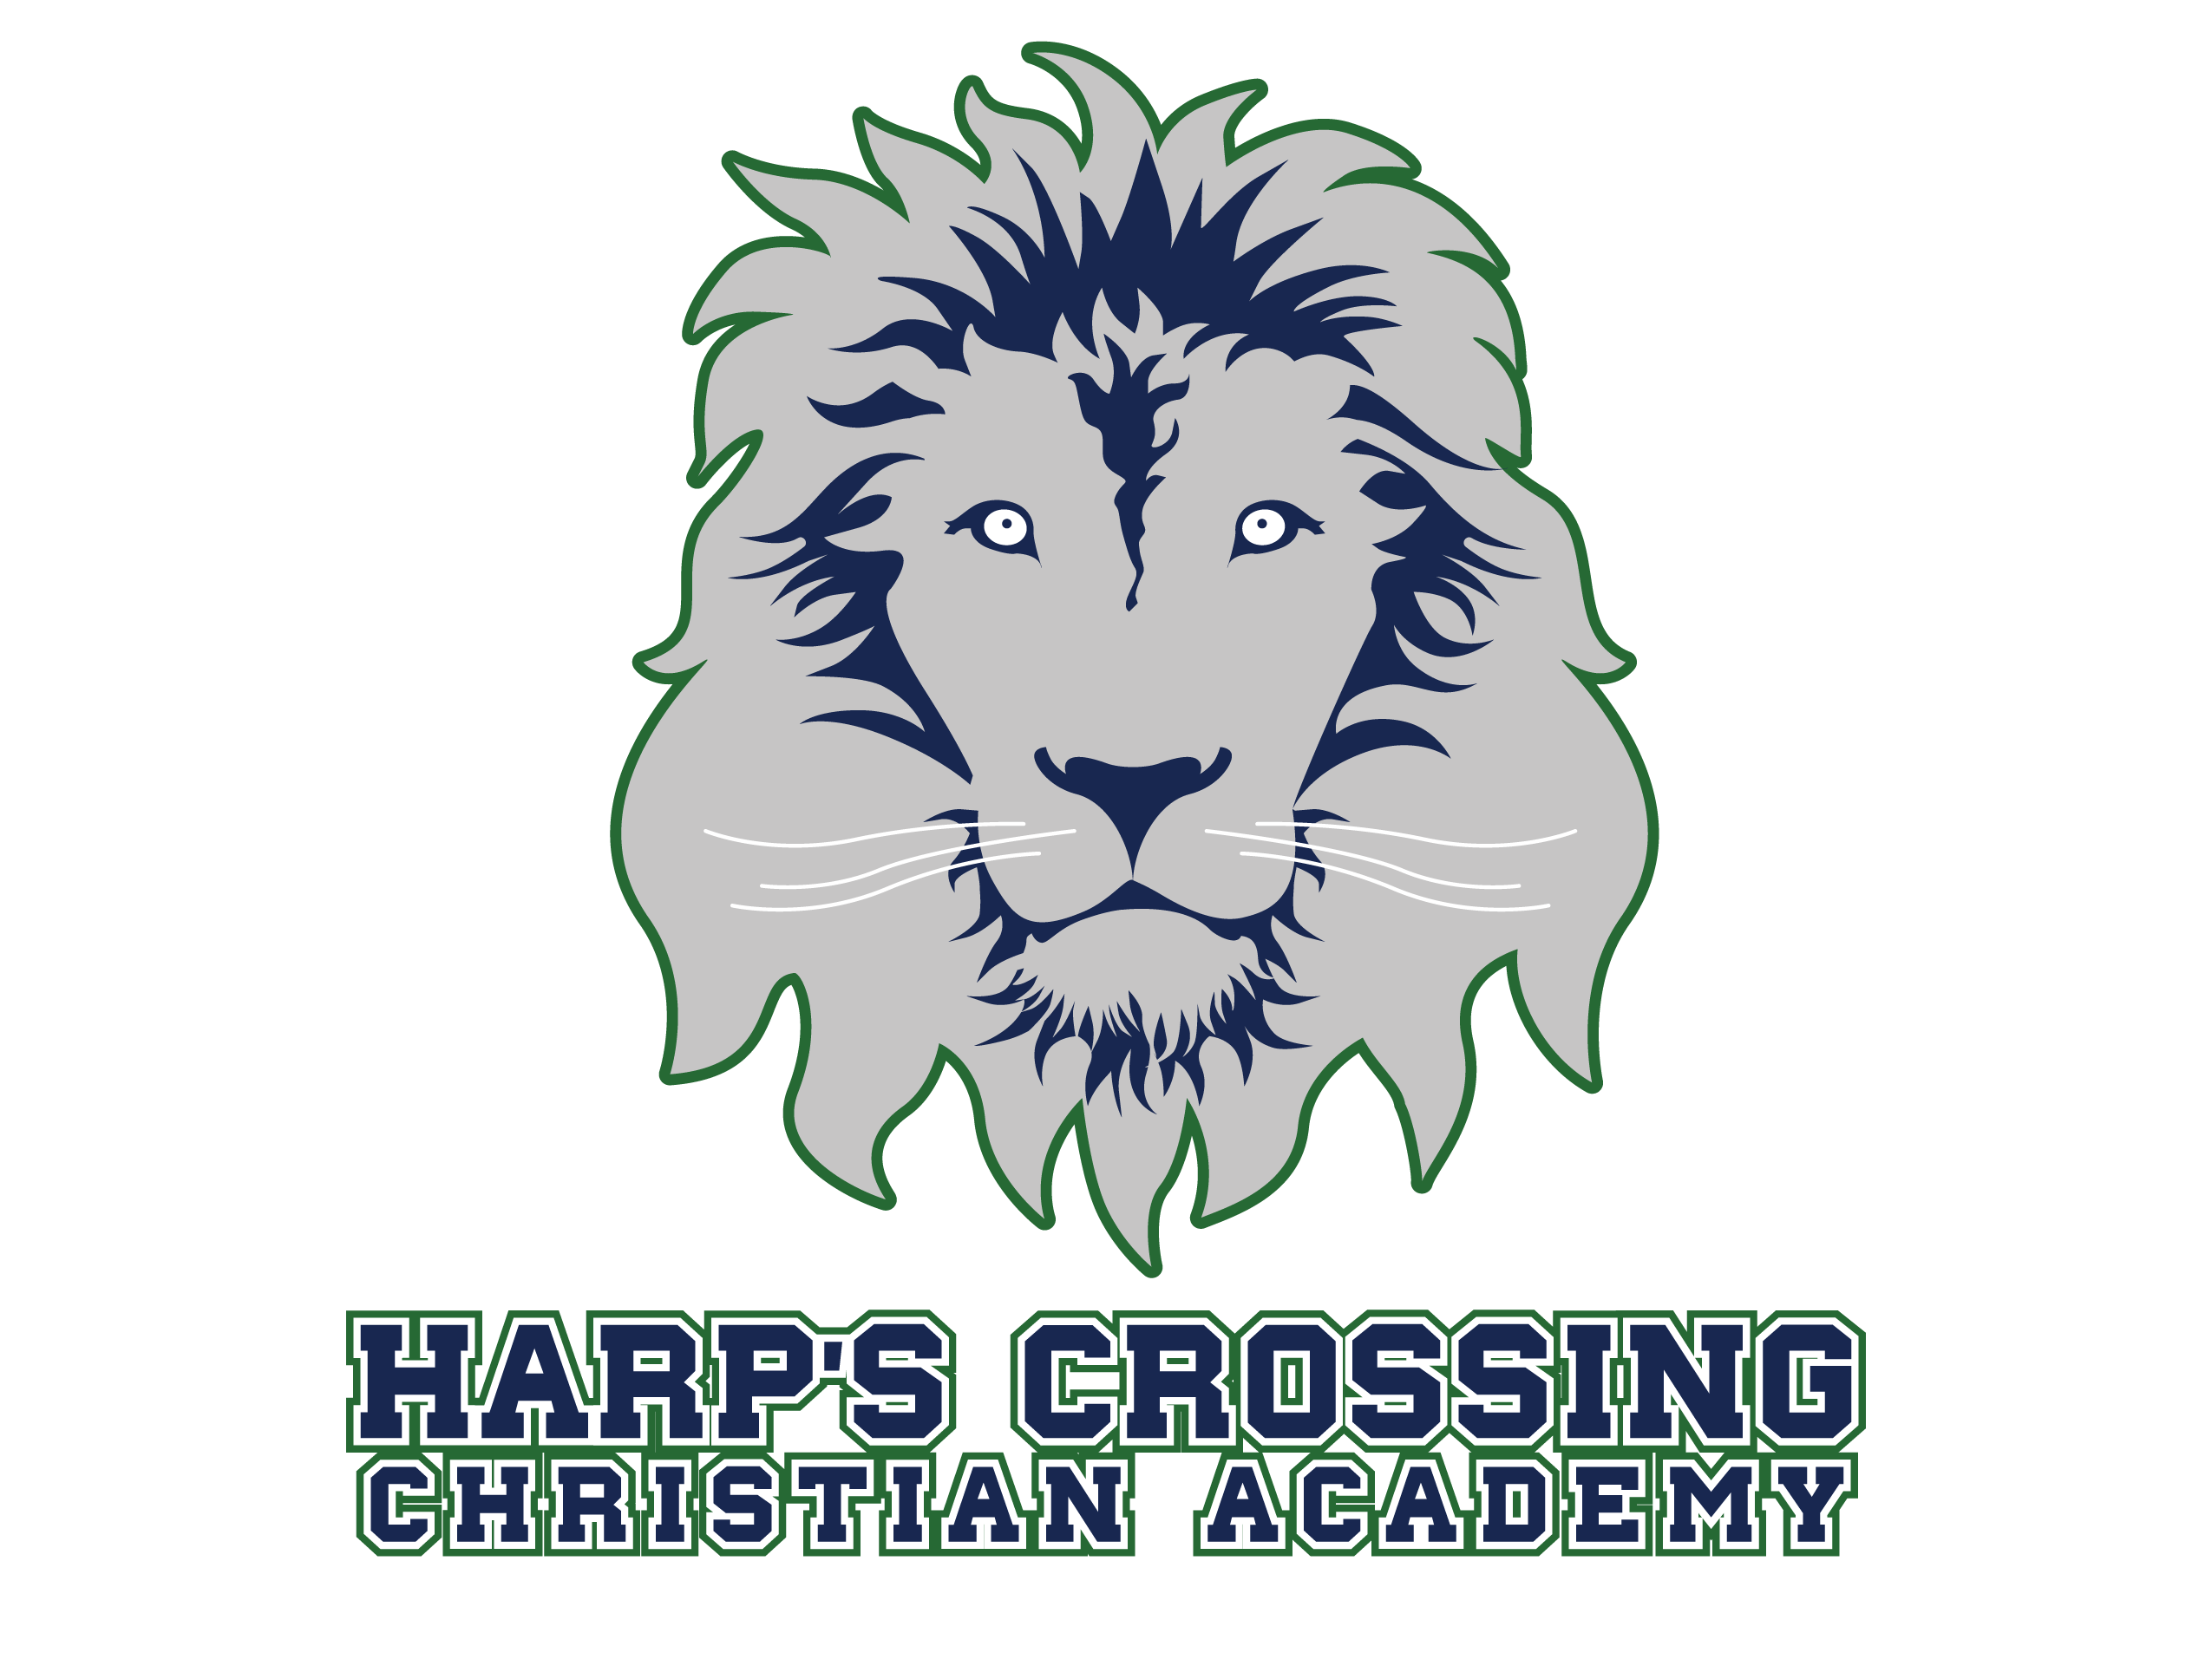 Harps Crossing Christian Academy